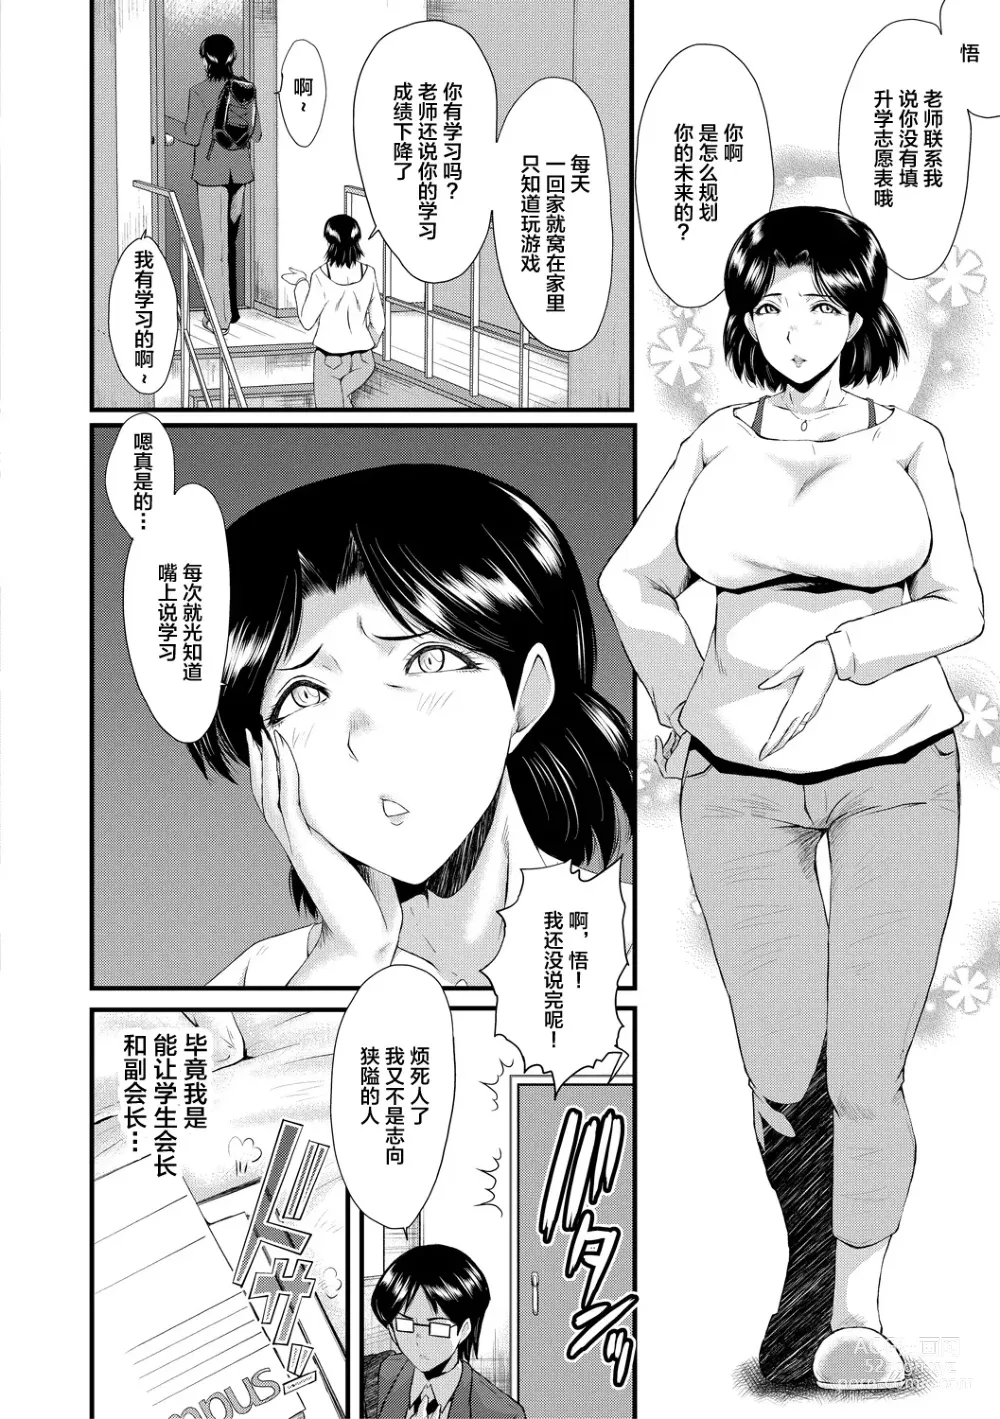 Page 12 of manga Sennou Kikan